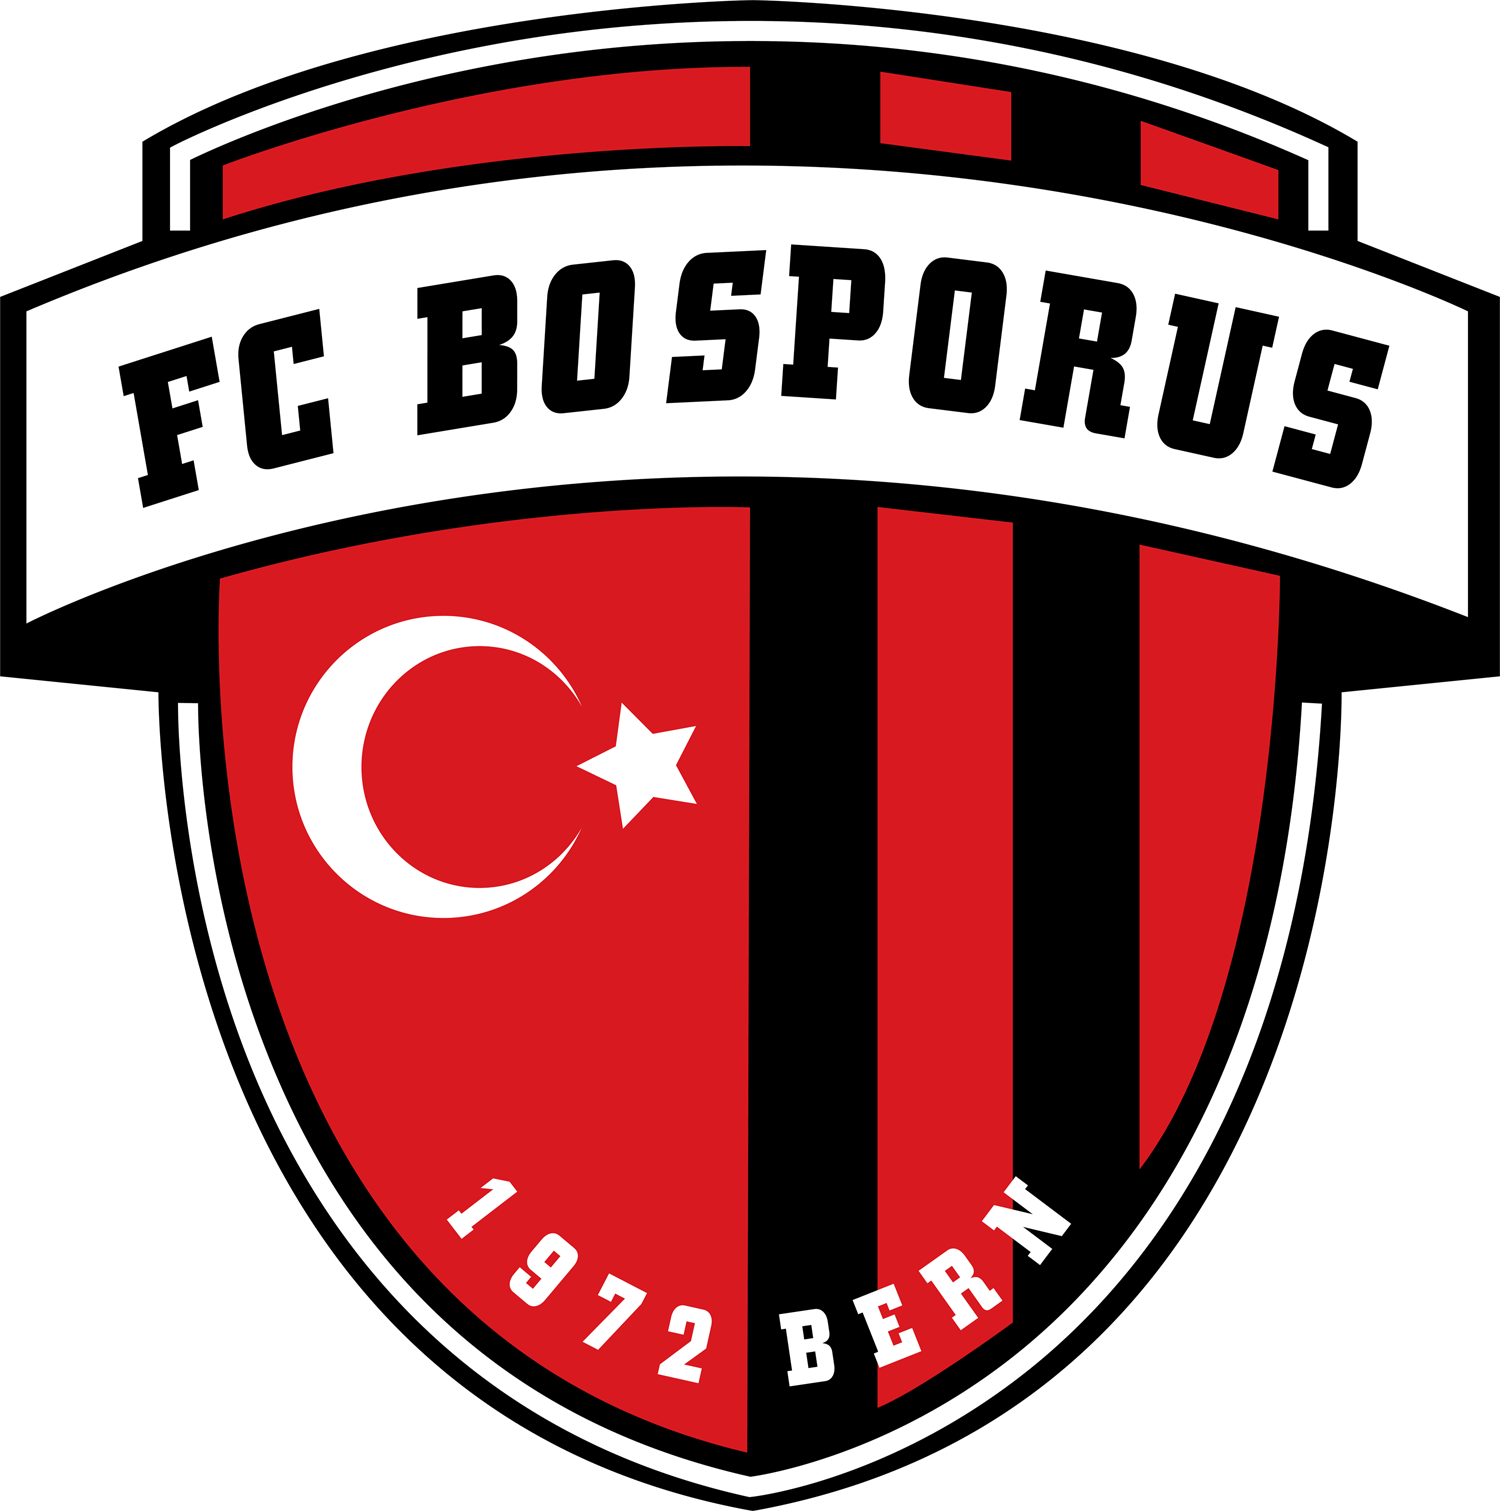 FC BOSPORUS